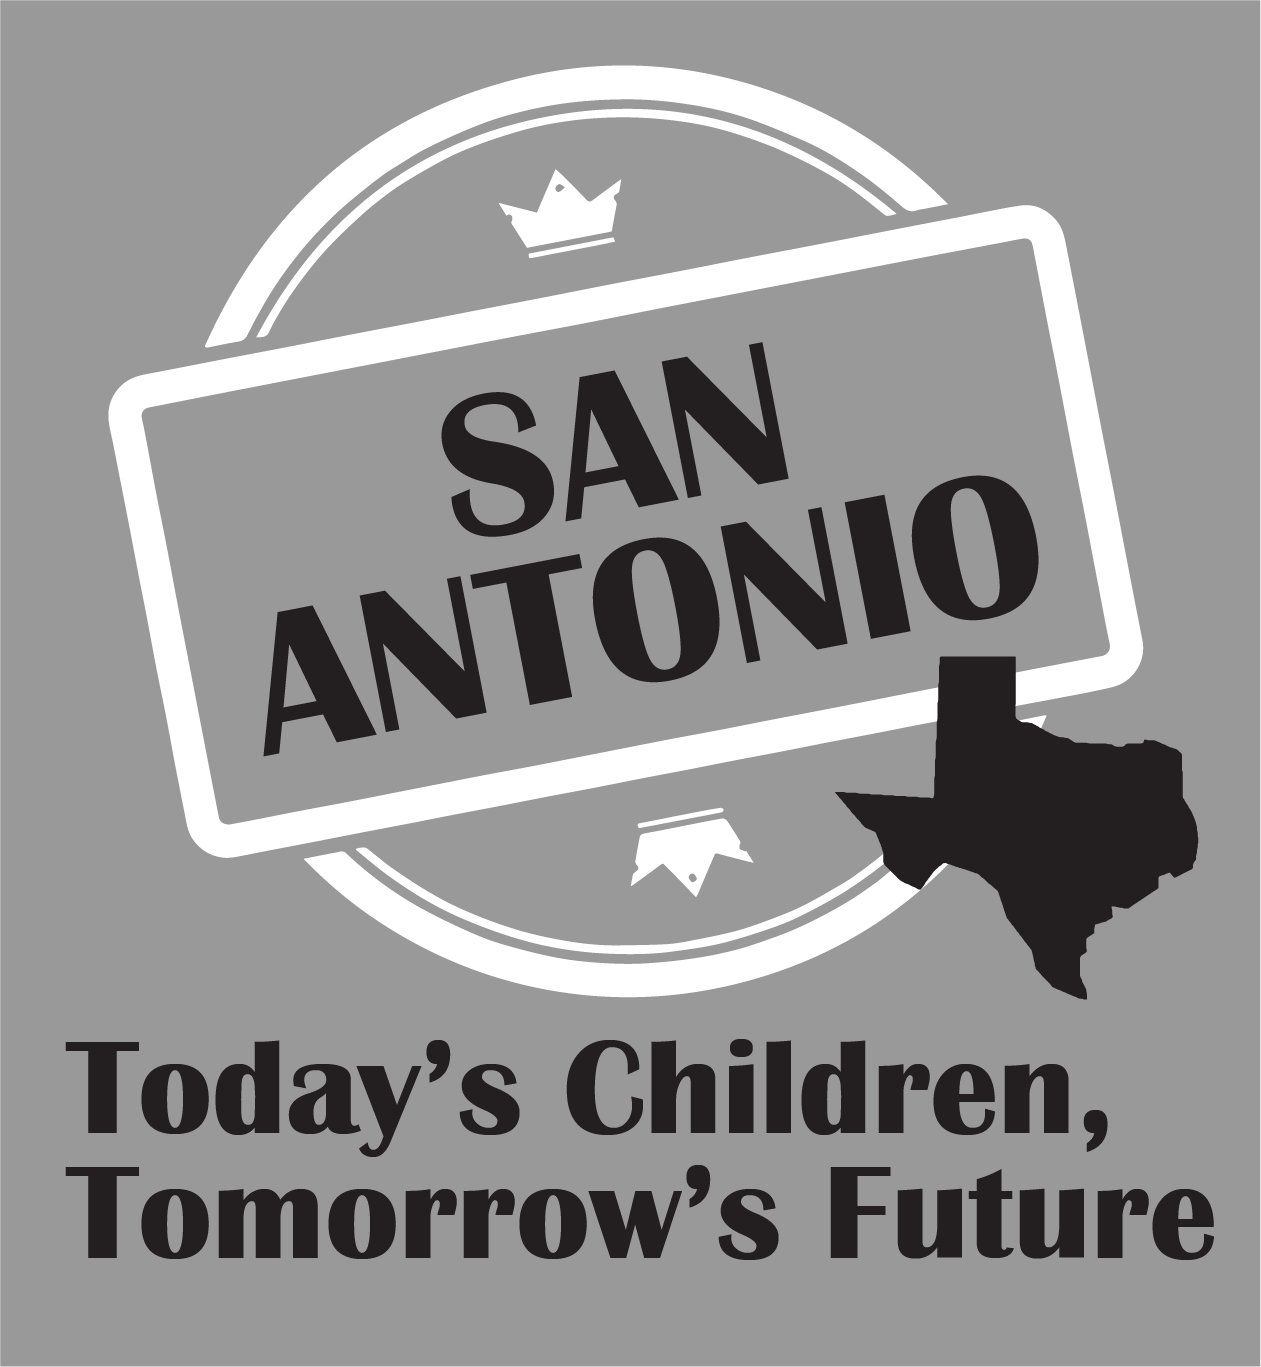 Image for Today's Children Tomorrow's Future - San Antonio